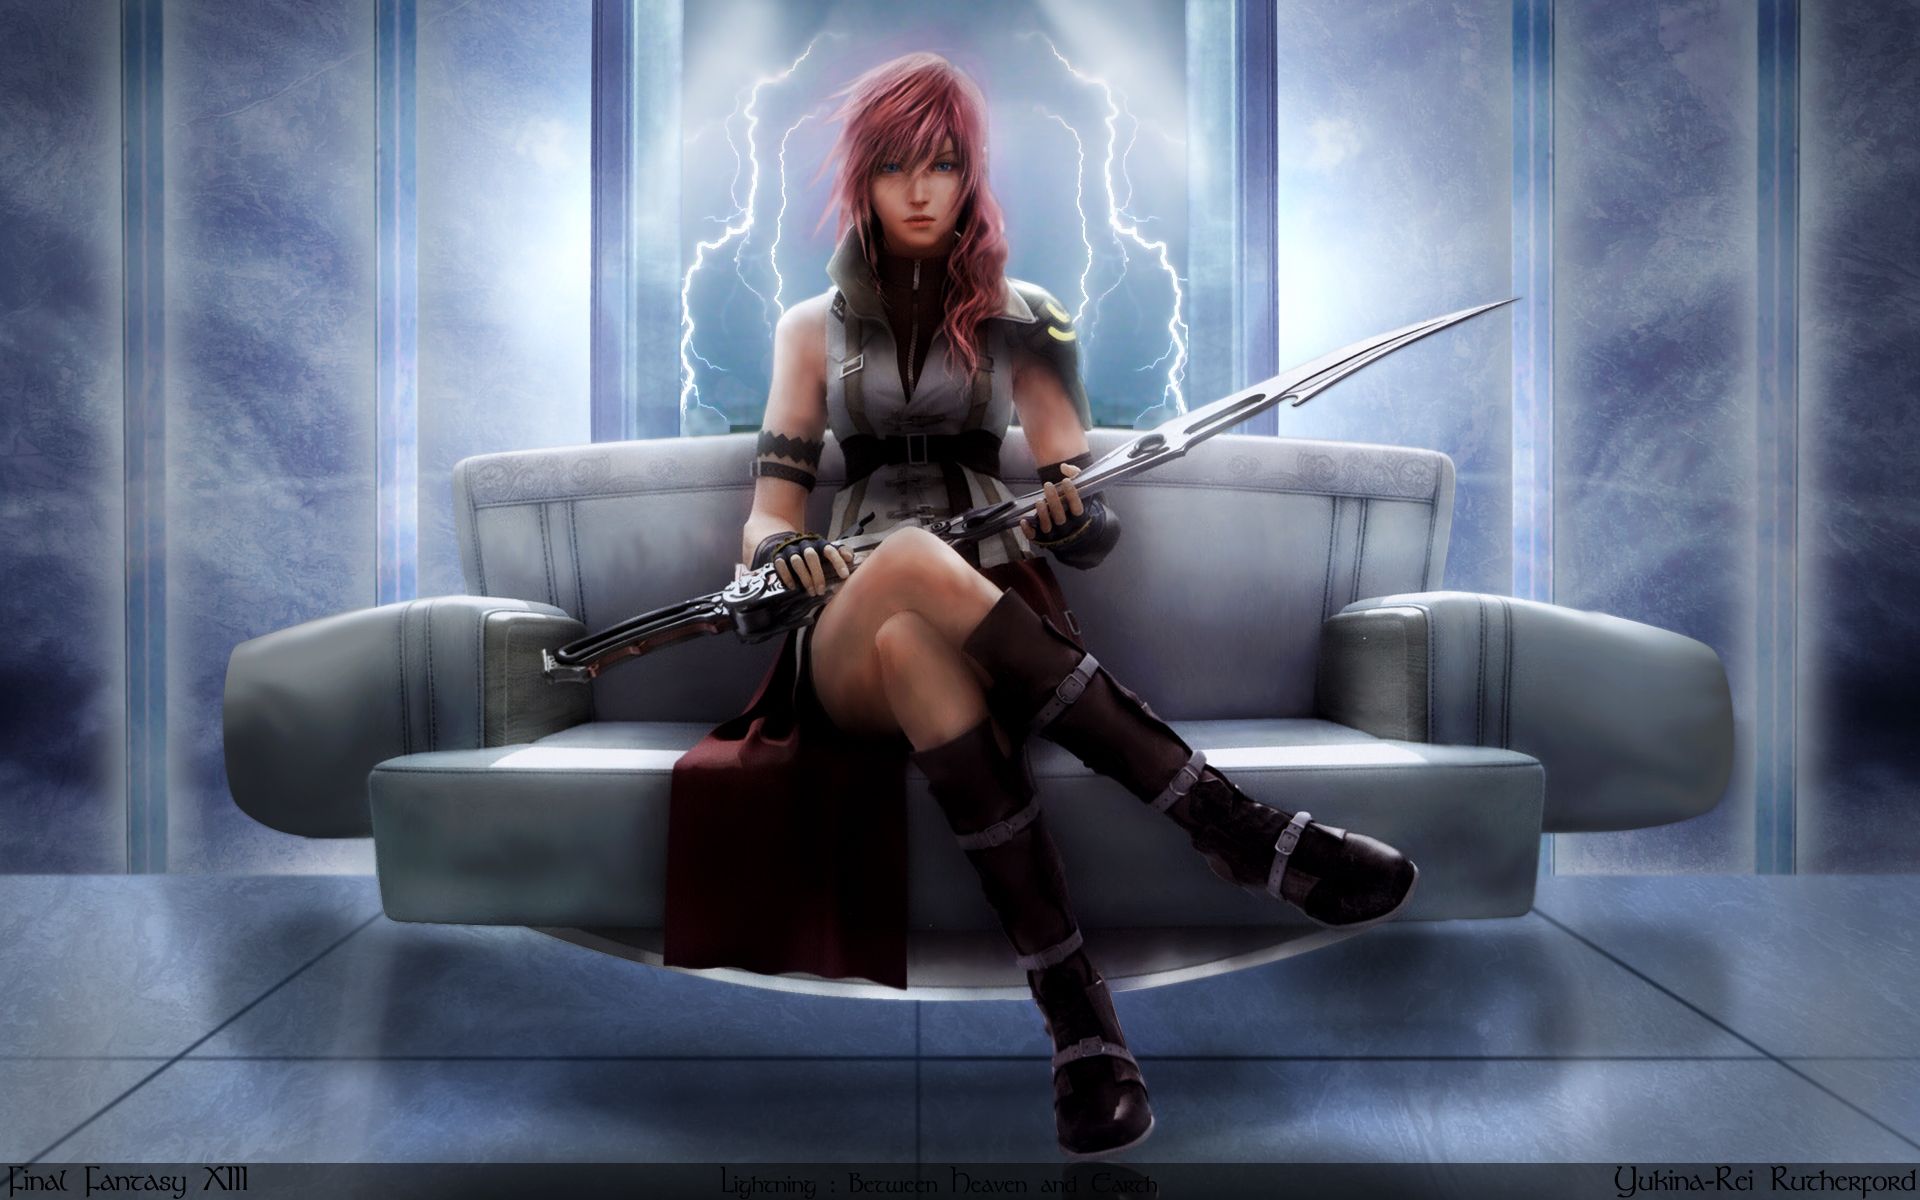 Final Fantasy XIII Wallpaper: Lightning: Between Heaven and Earth